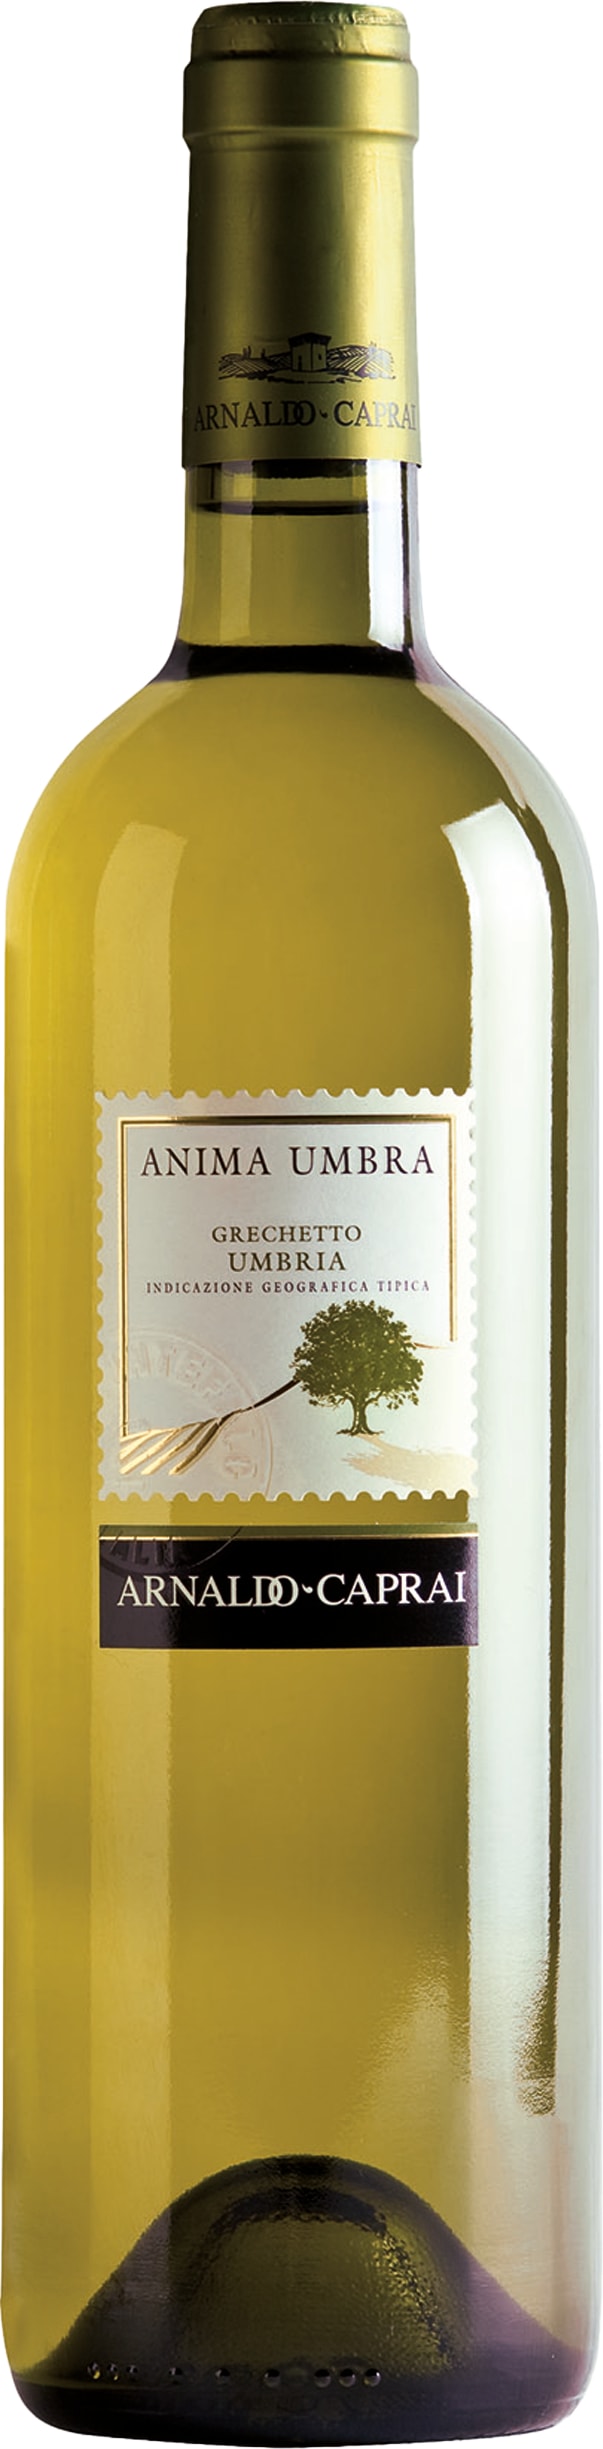 Arnaldo Caprai Anima Umbra Grechetto 2022 75cl - Buy Arnaldo Caprai Wines from GREAT WINES DIRECT wine shop